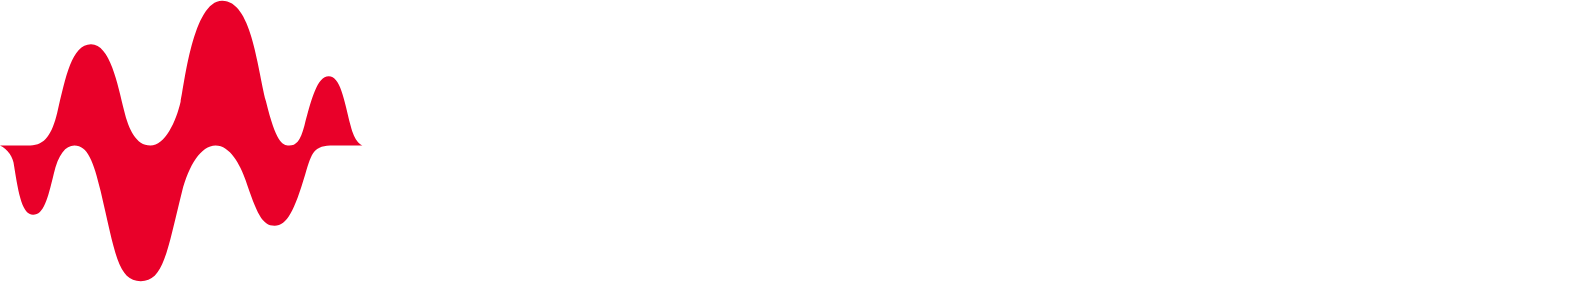 Keysight logo grand pour les fonds sombres (PNG transparent)